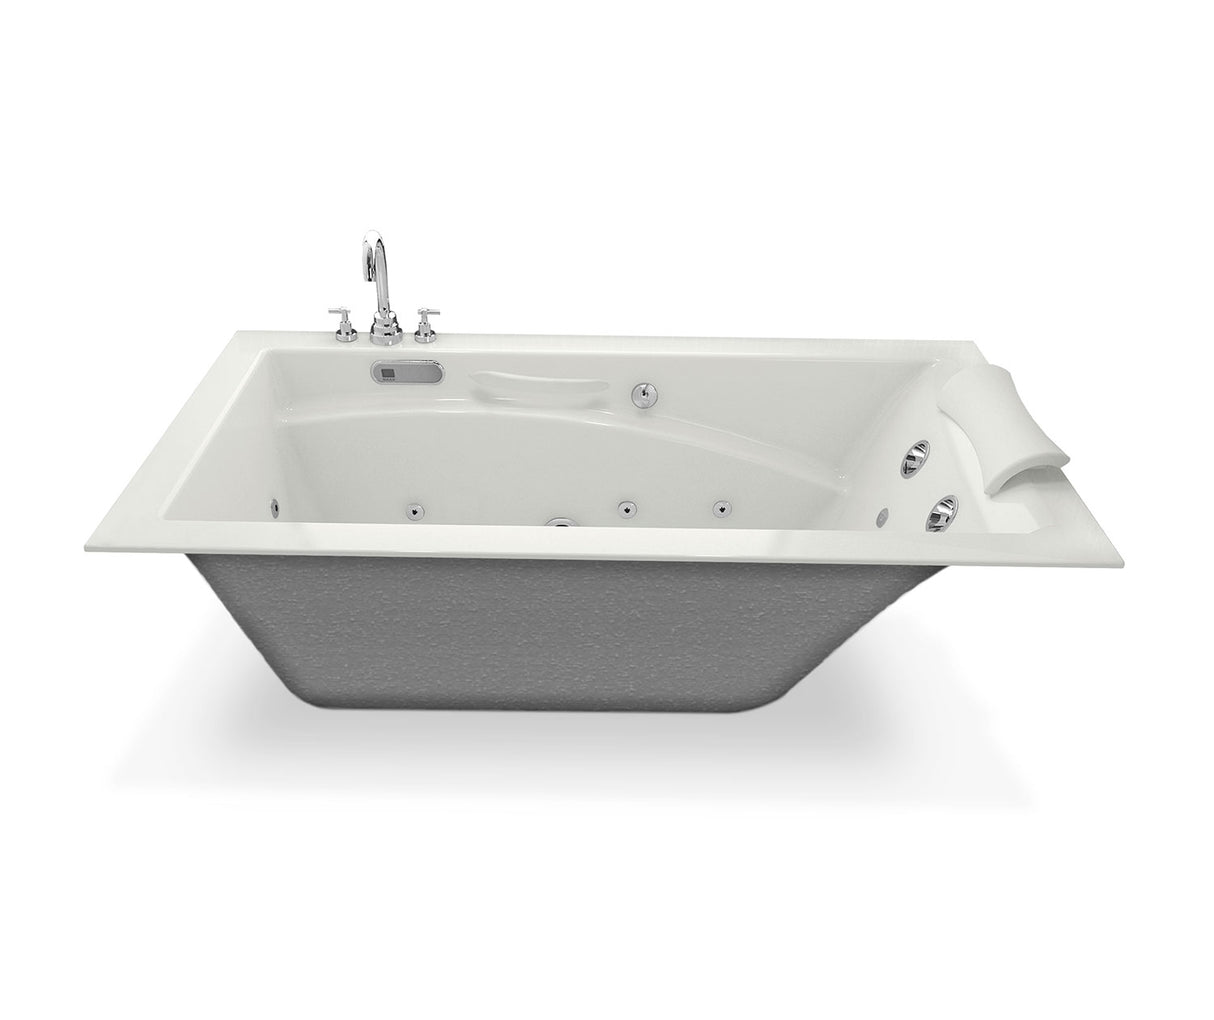 MAAX 101265-000-001-000 Optik 6032 Acrylic Alcove End Drain Bathtub in White